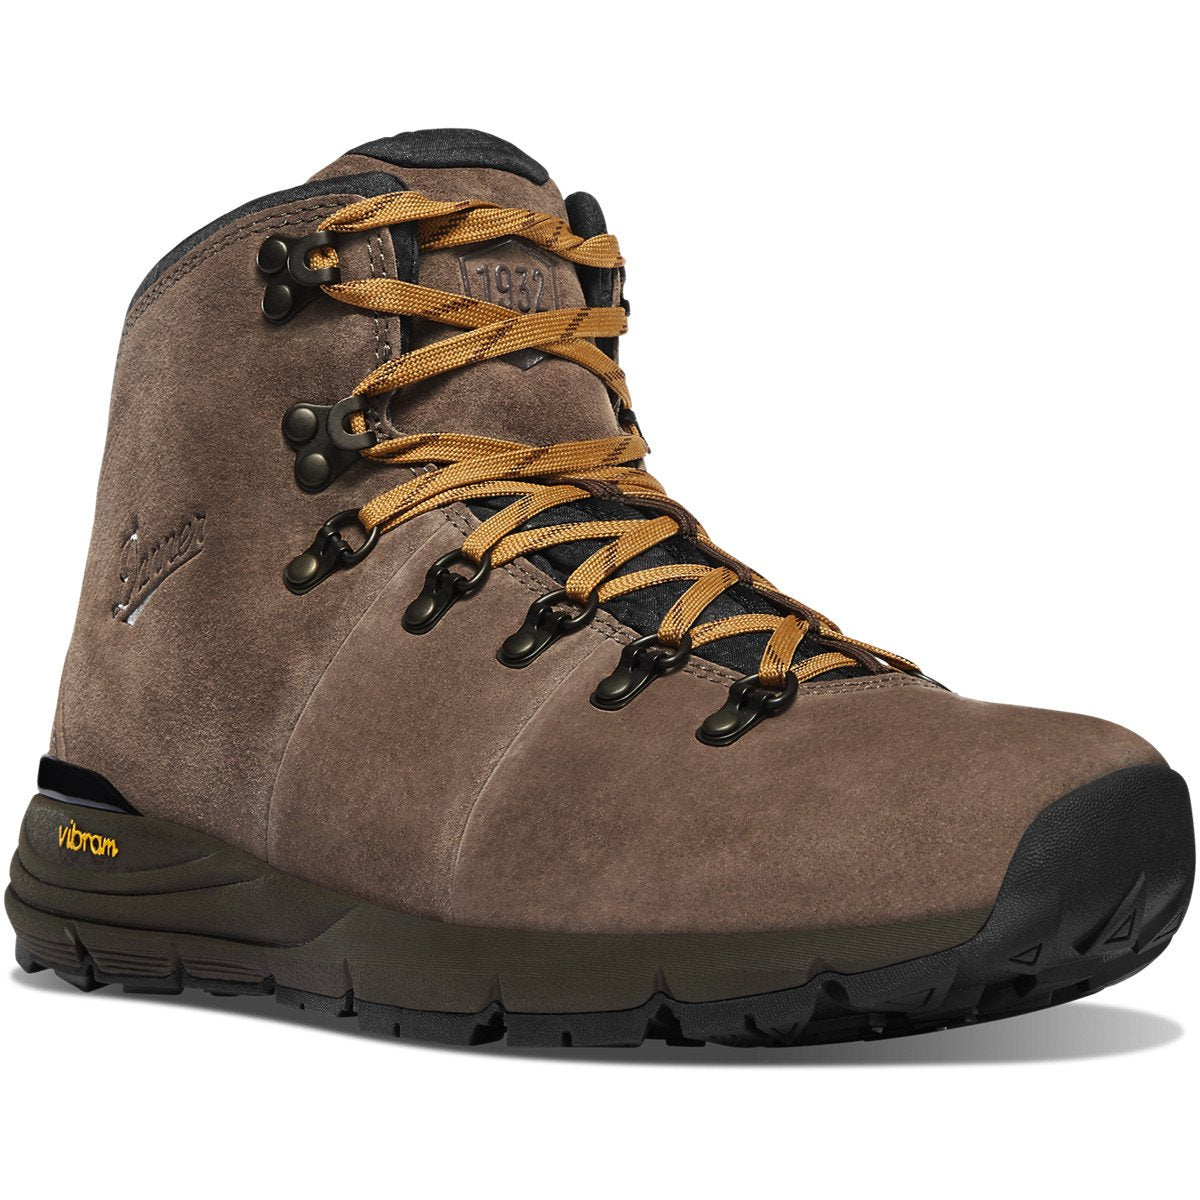 Danner Men's Mountain 600 4.5" Waterproof Hiking Boot in Dark Earth/Woodthrush from the side